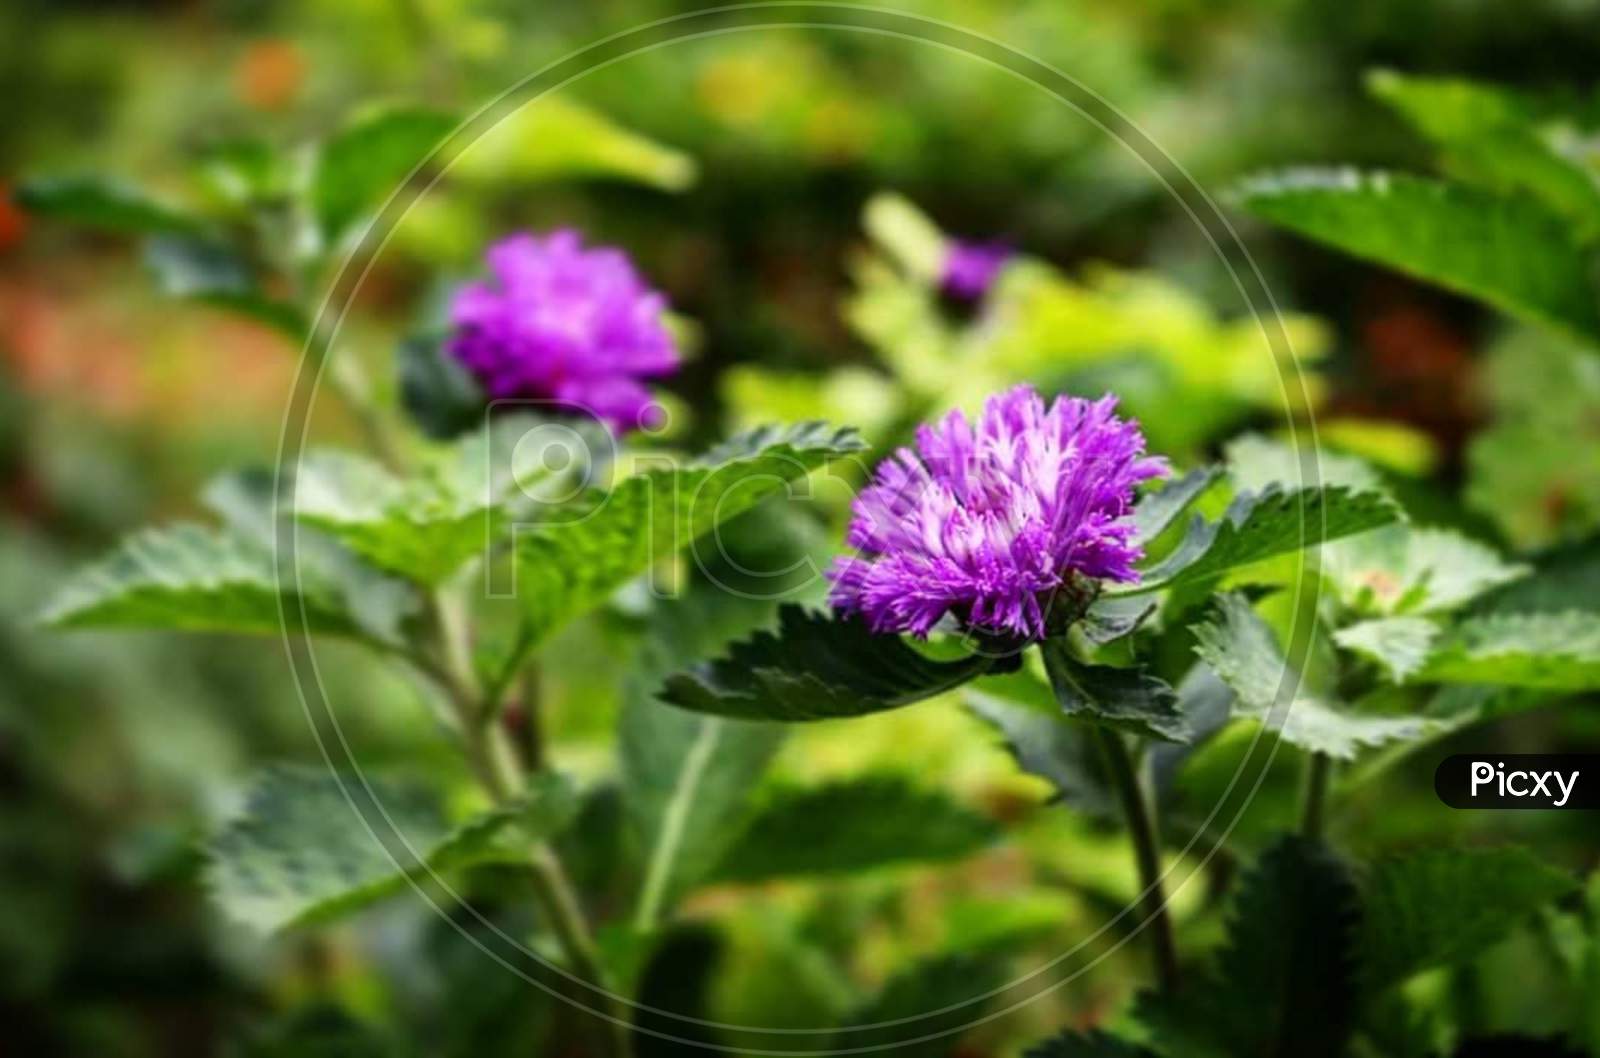 Purple×Remove  Violet×Remove  Flowering plant×Remove  Plant×Remove  Flower×Remove  Petal×Remove  Grass×Remove  Close-up×Remove  Leaf×Remove  Red clover×Remove